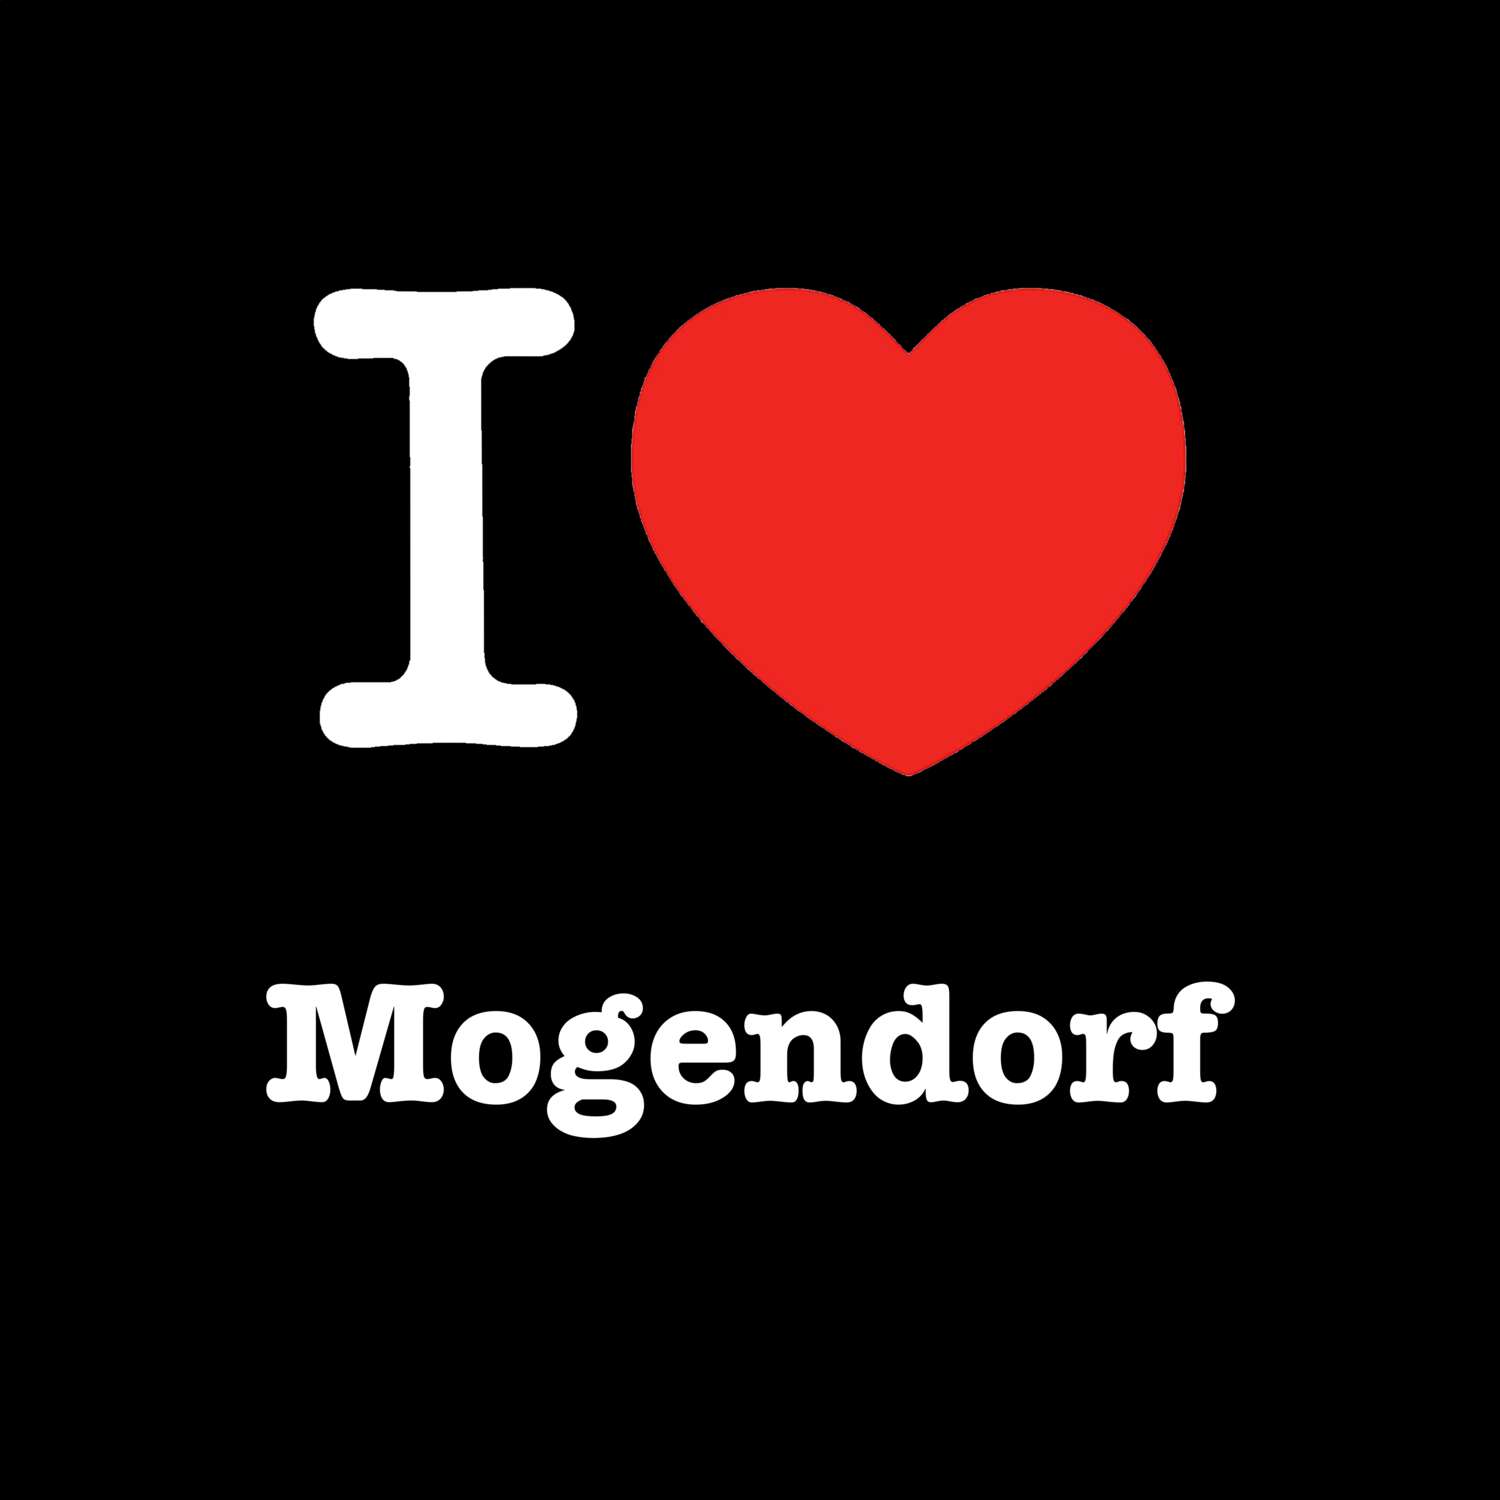 Mogendorf T-Shirt »I love«